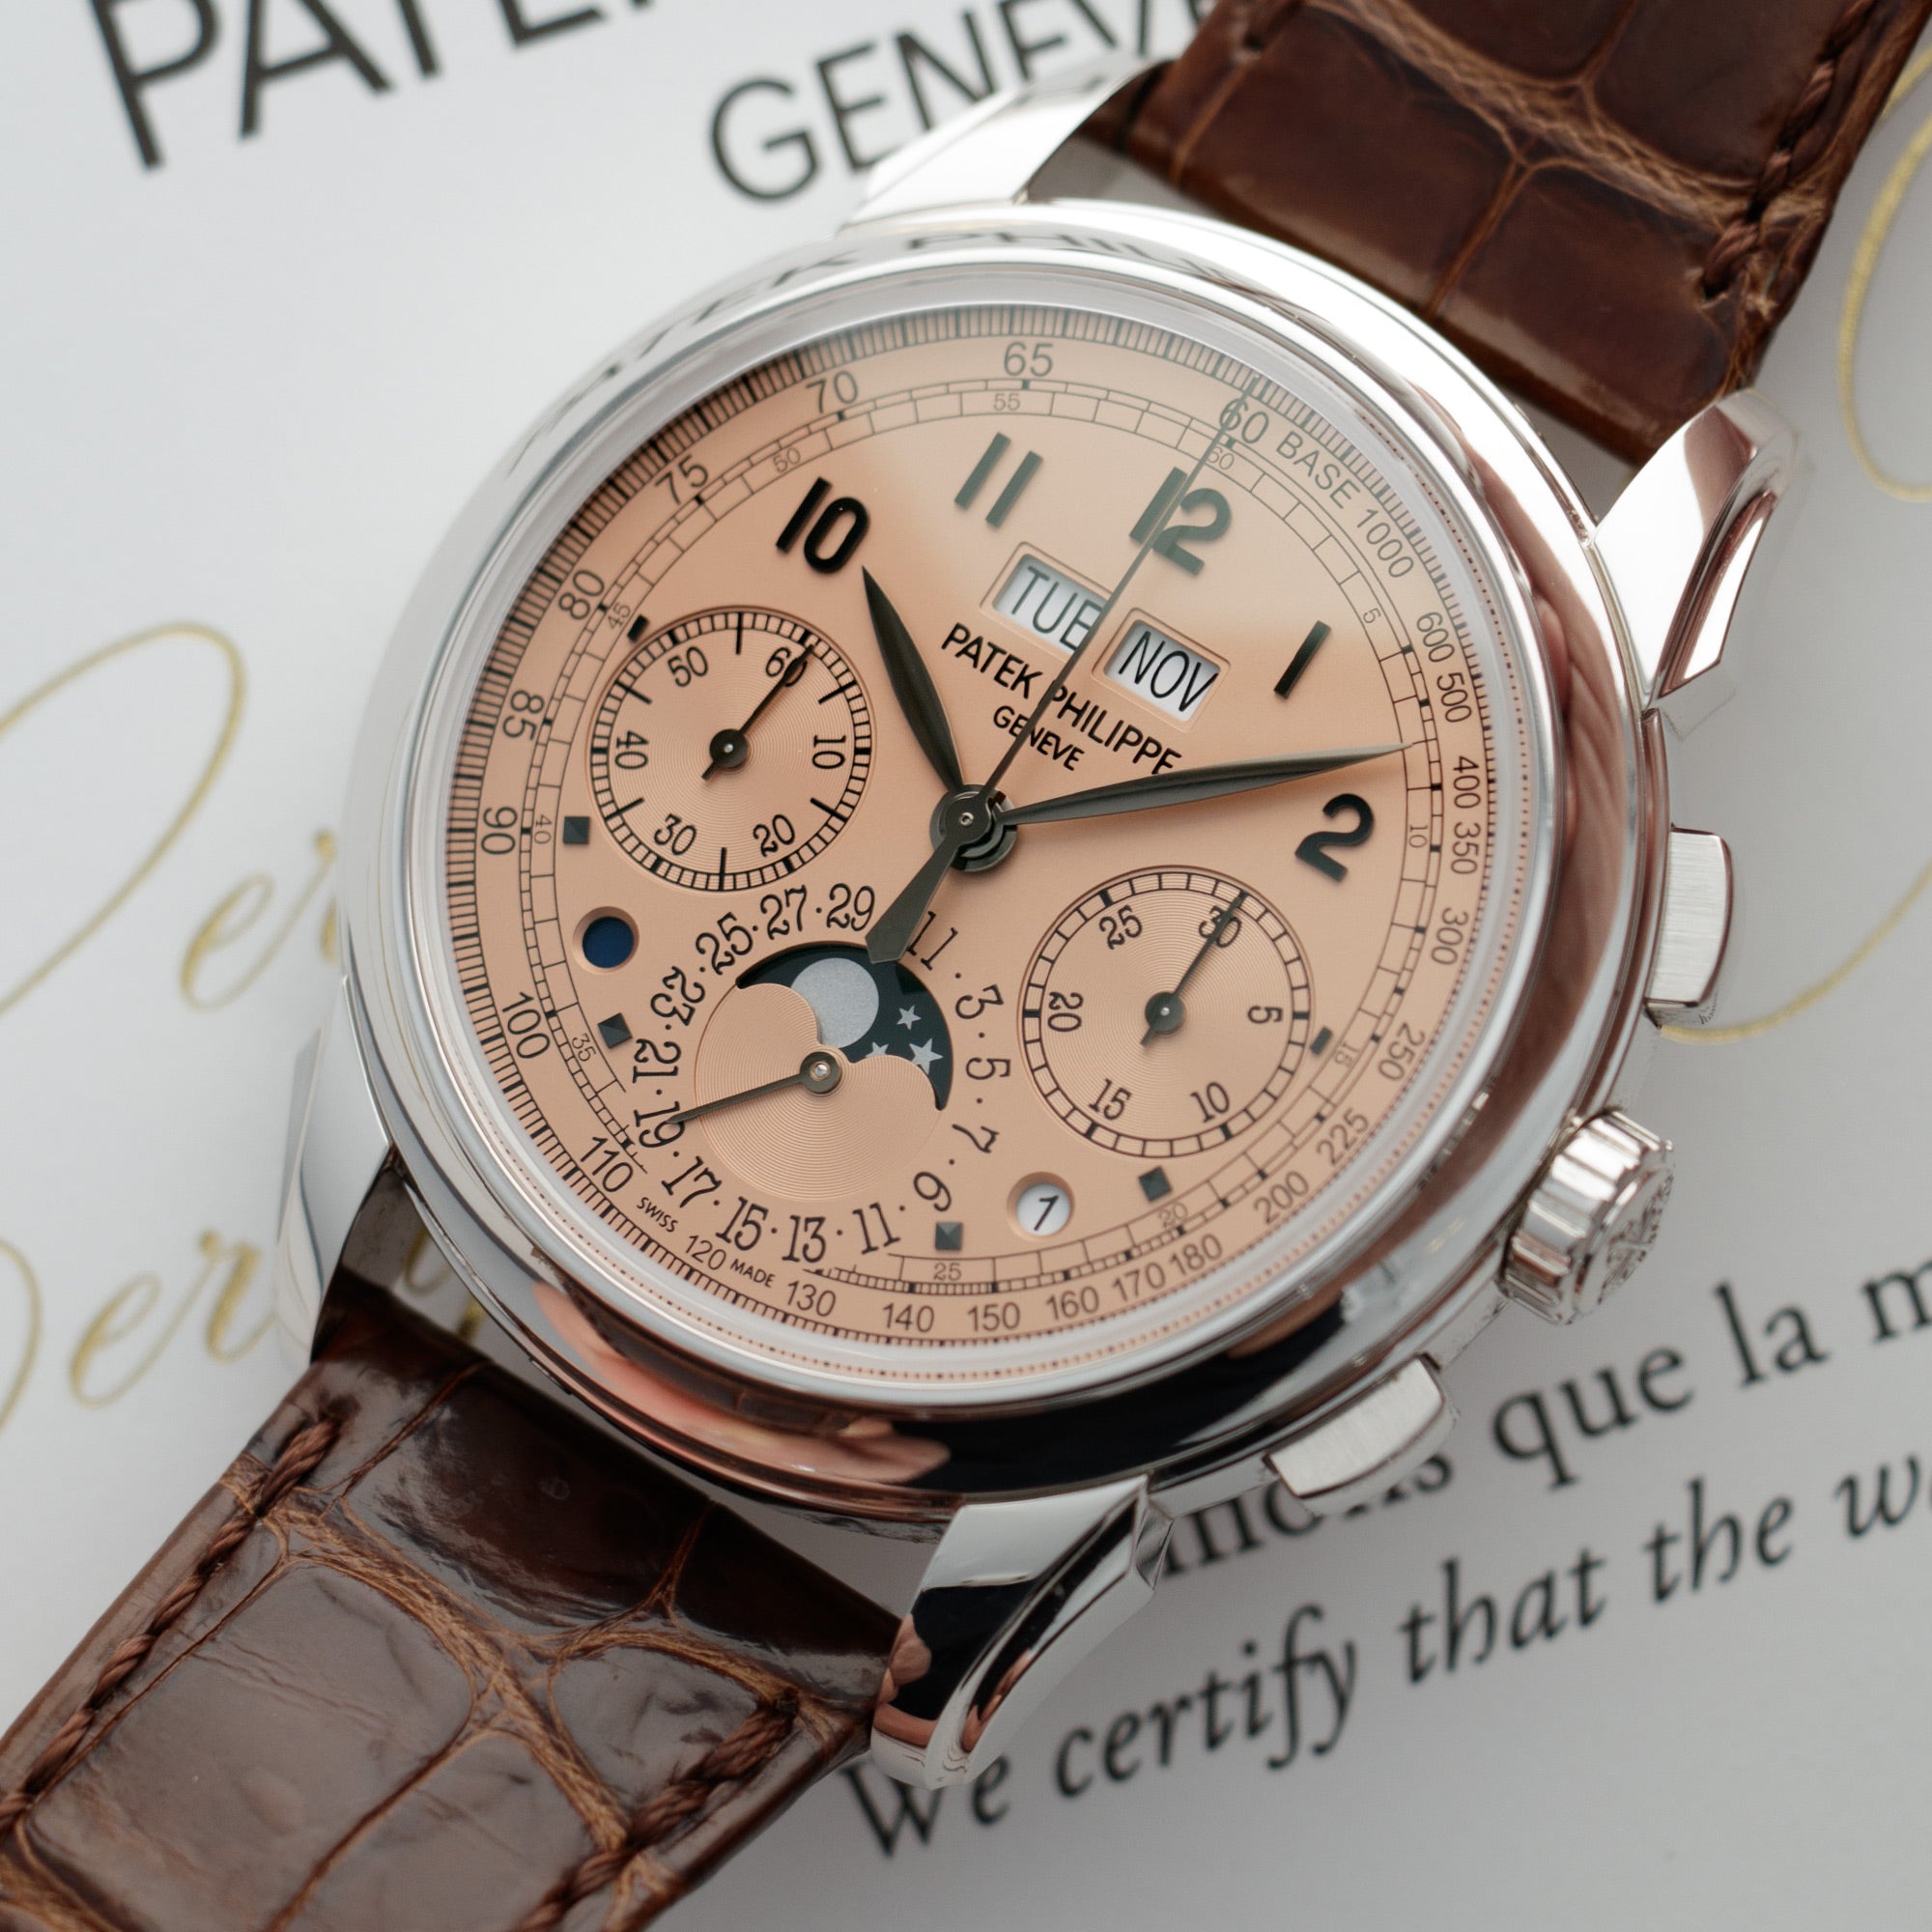 Patek Philippe - Patek Philippe Platinum Perpetual Calendar Chronograph, Ref. 5270P - The Keystone Watches